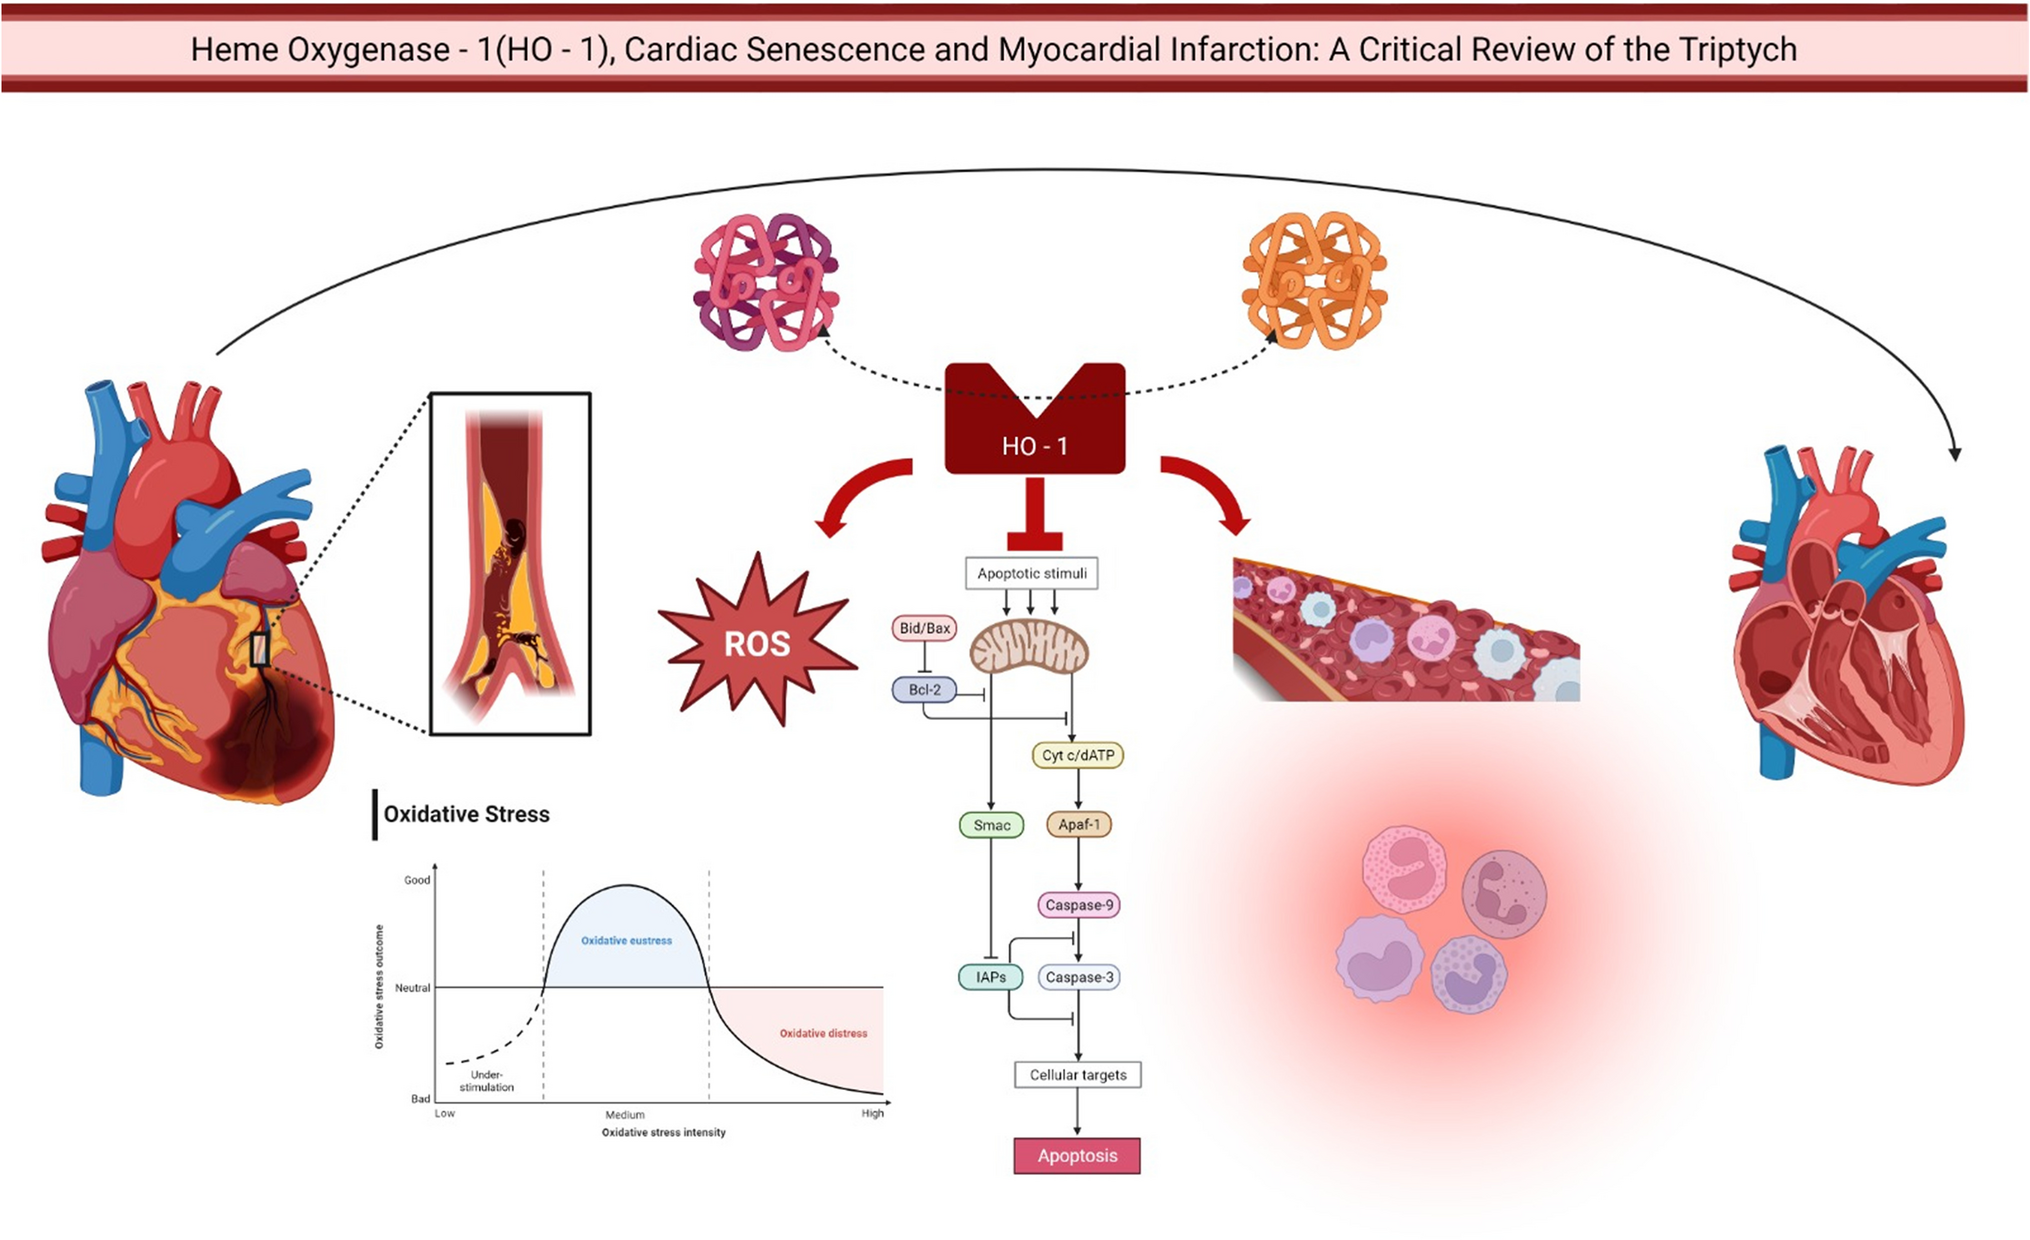 Heme Oxygenase-1, Cardiac Senescence, and Myocardial Infarction: A Critical Review of the Triptych